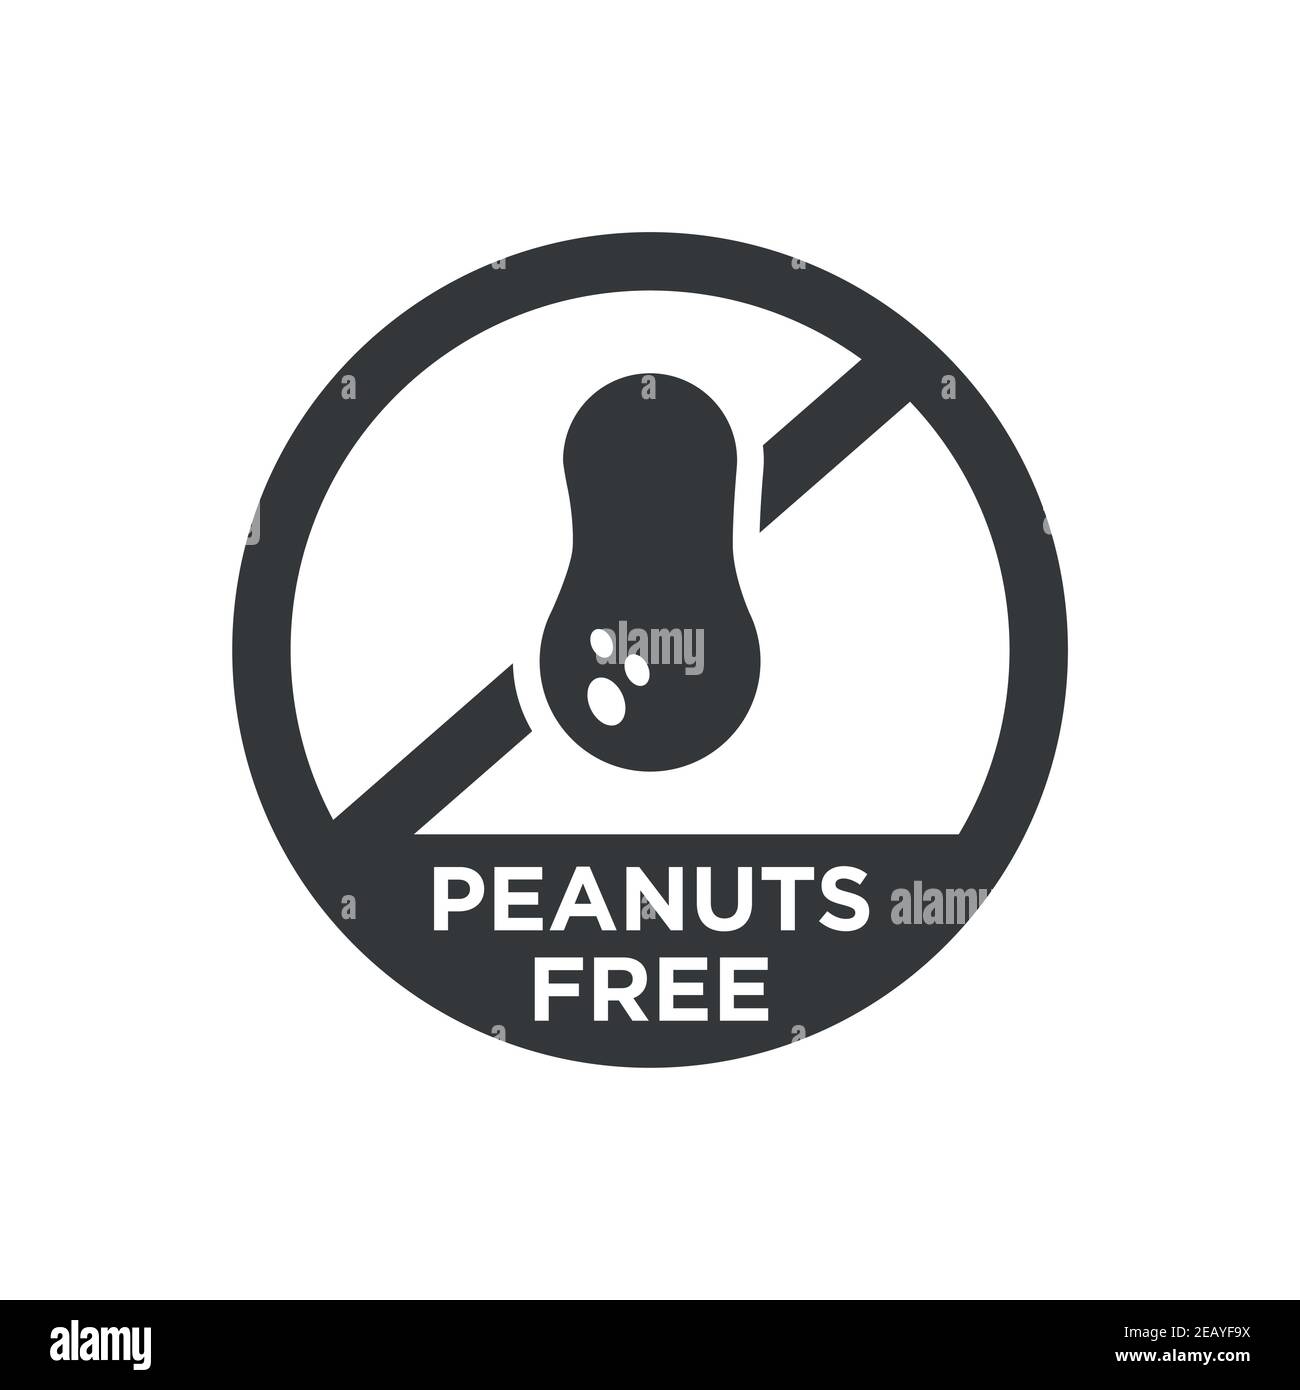 Peanuts free round icon Stock Vector